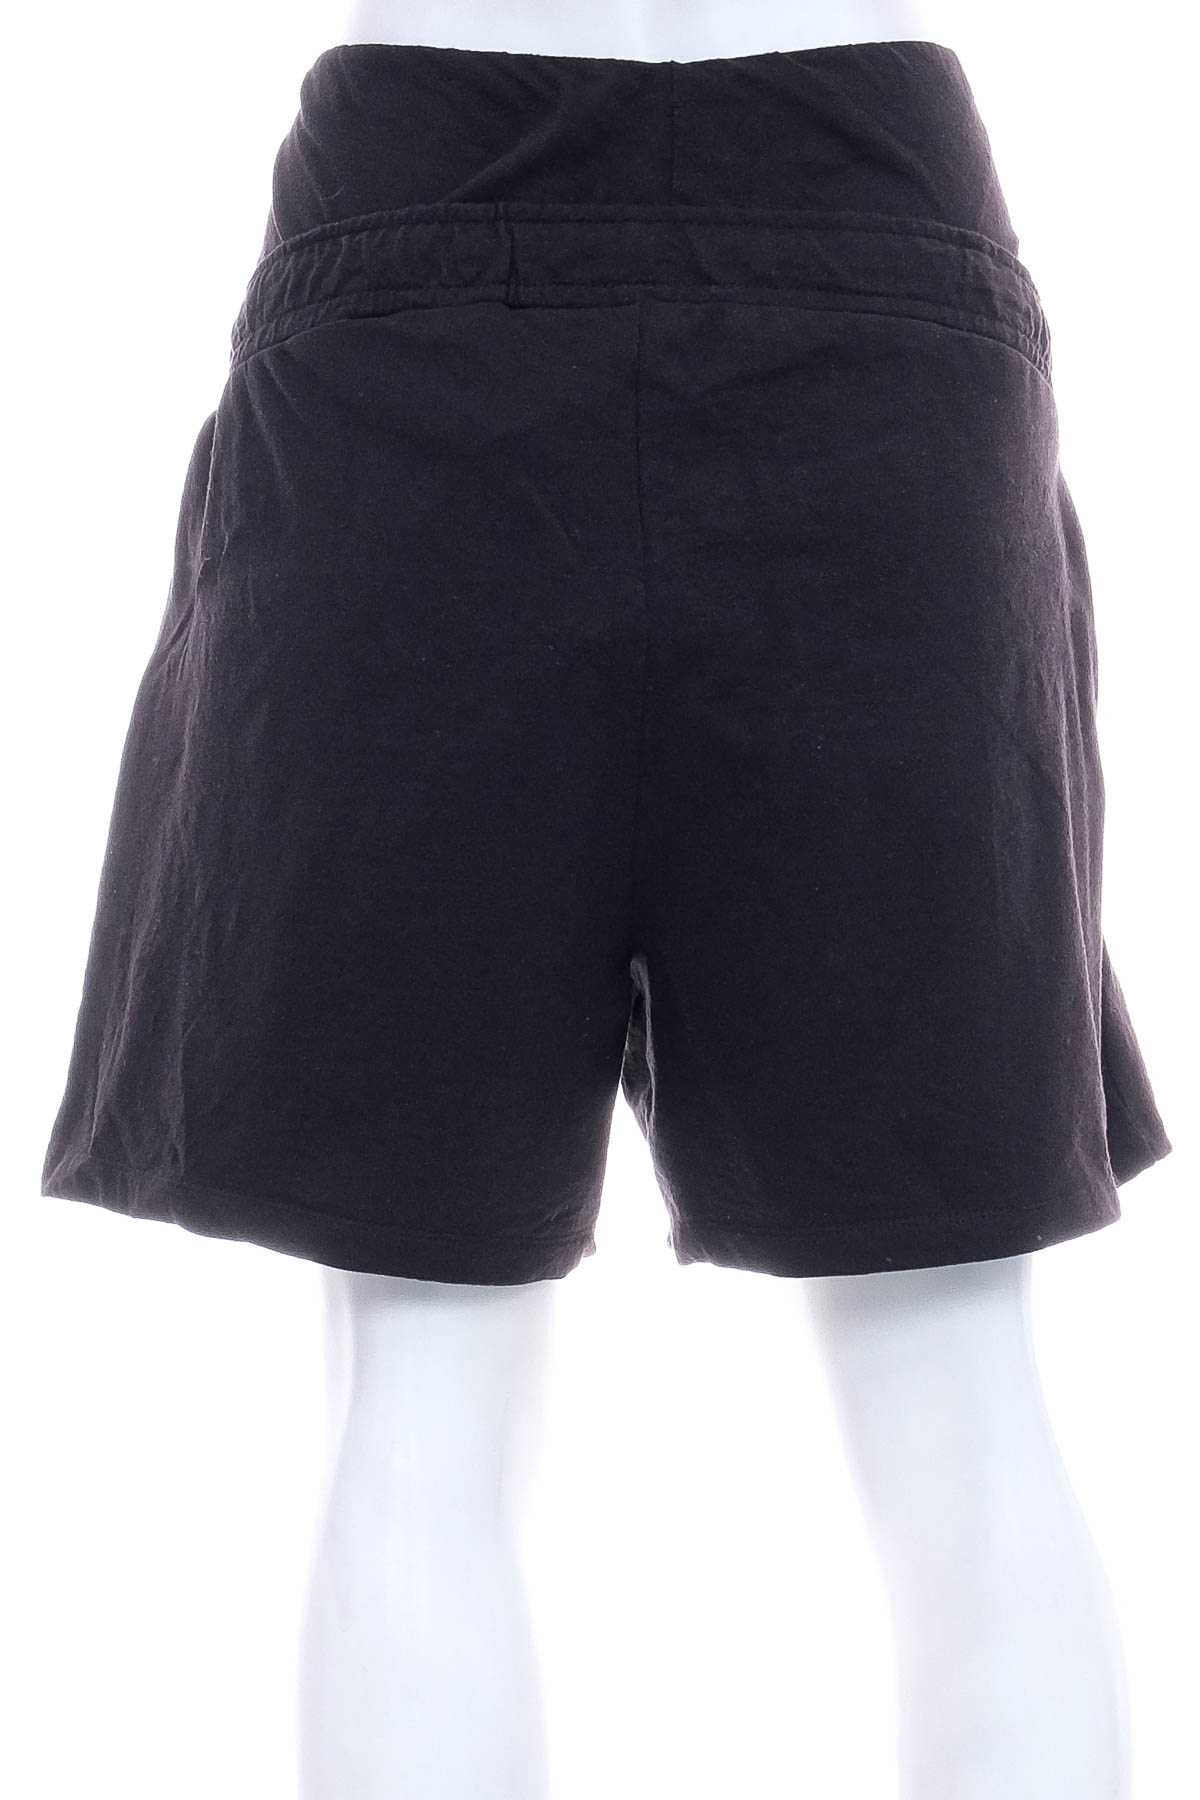 Shorts for pregnant women - Mama Bpc Bonprix Collection - 1